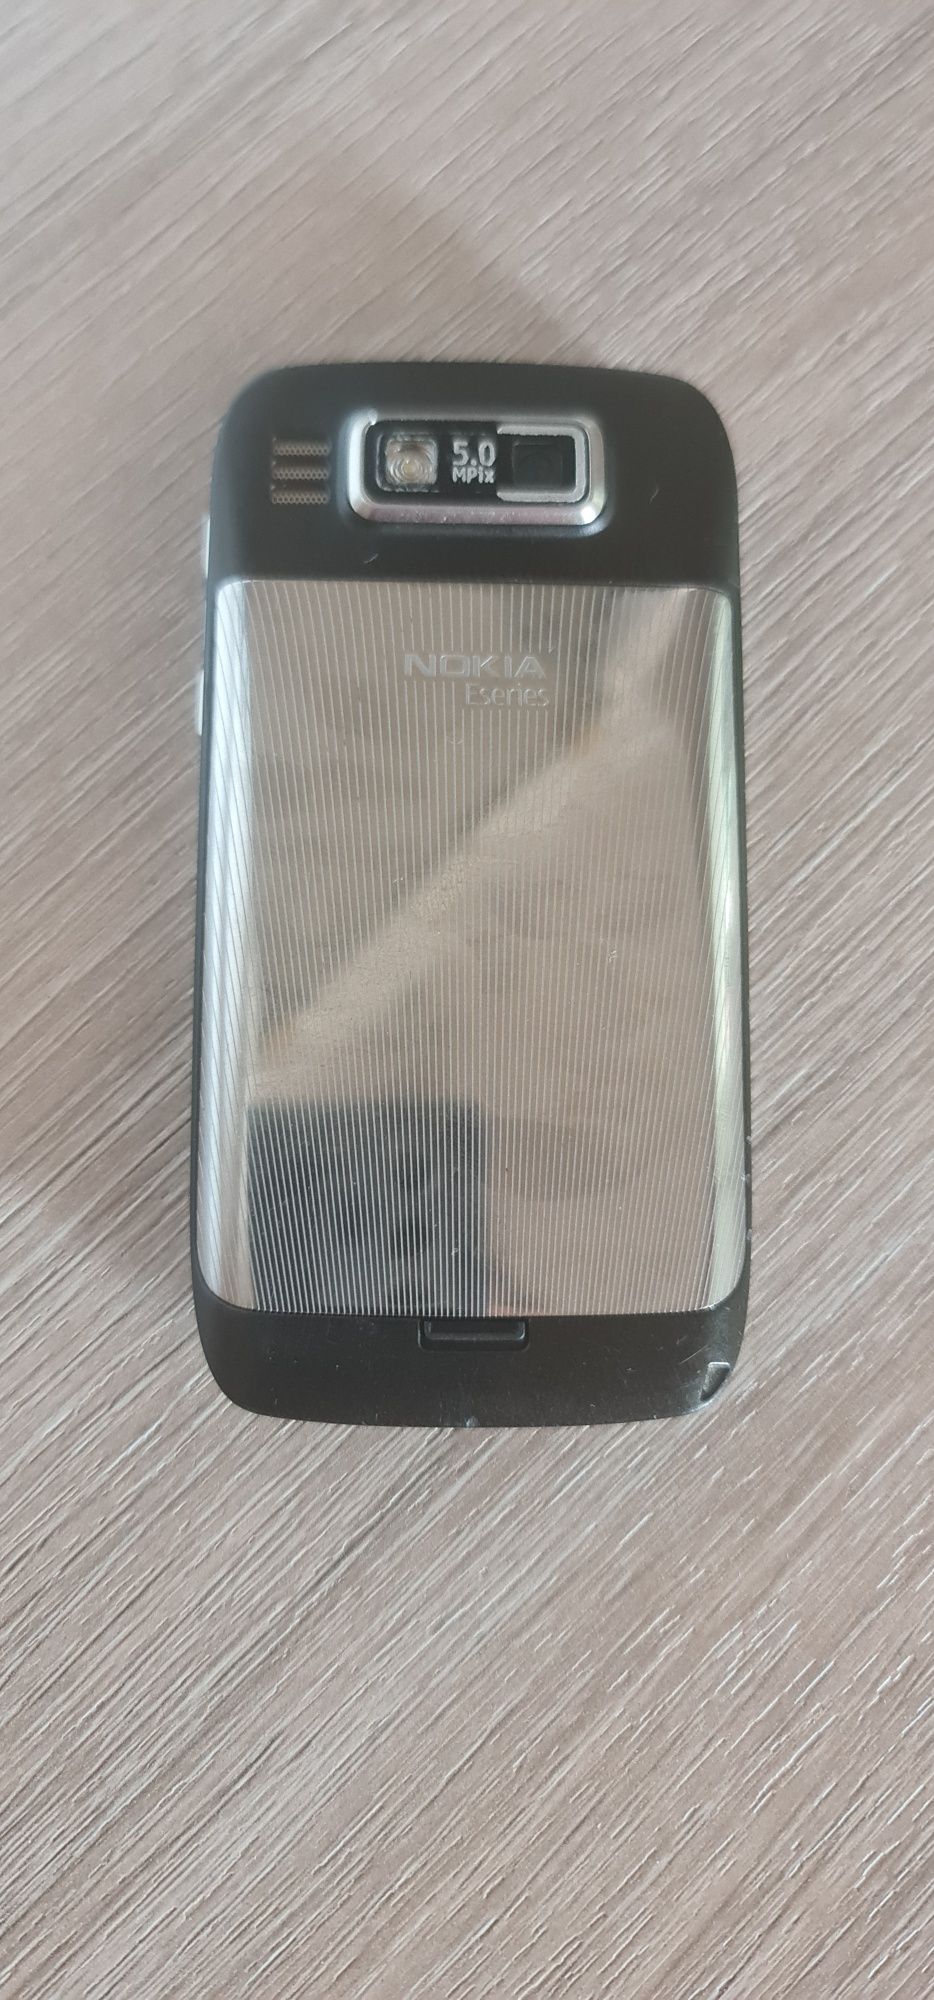 Nokia E72 liber de retea